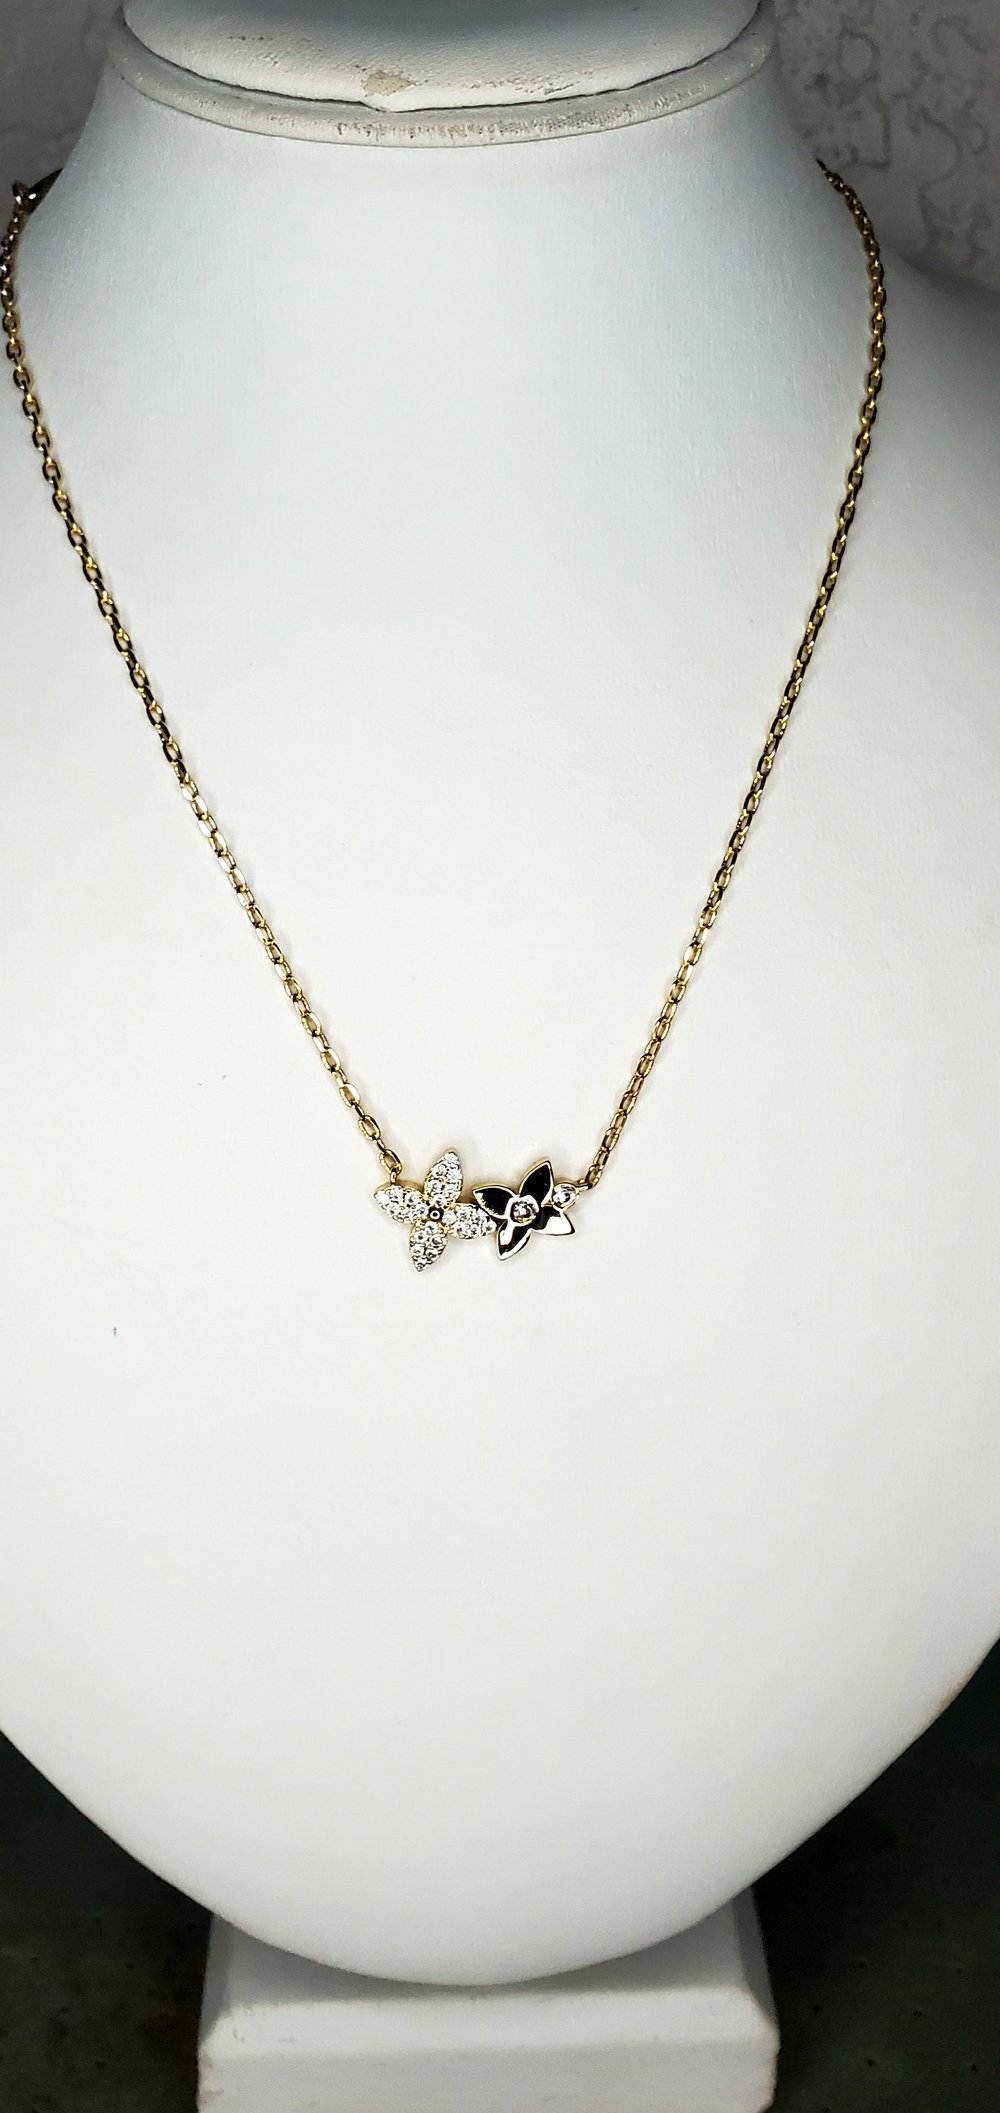 Image of LV Diamond Emblem Necklace